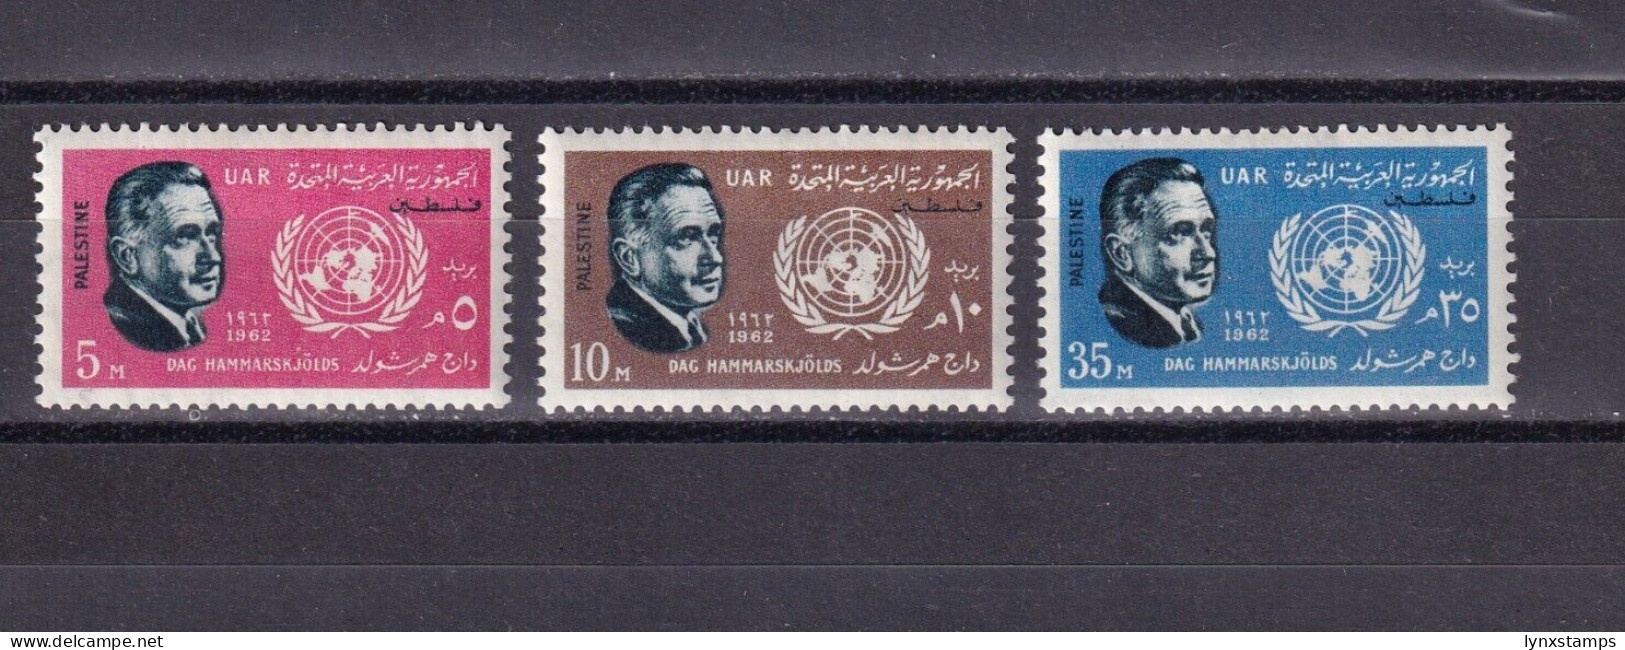 SA06b United Arab Republic Palestine 1962 Dag Hammarskjold Commemoration Mint - Palästina